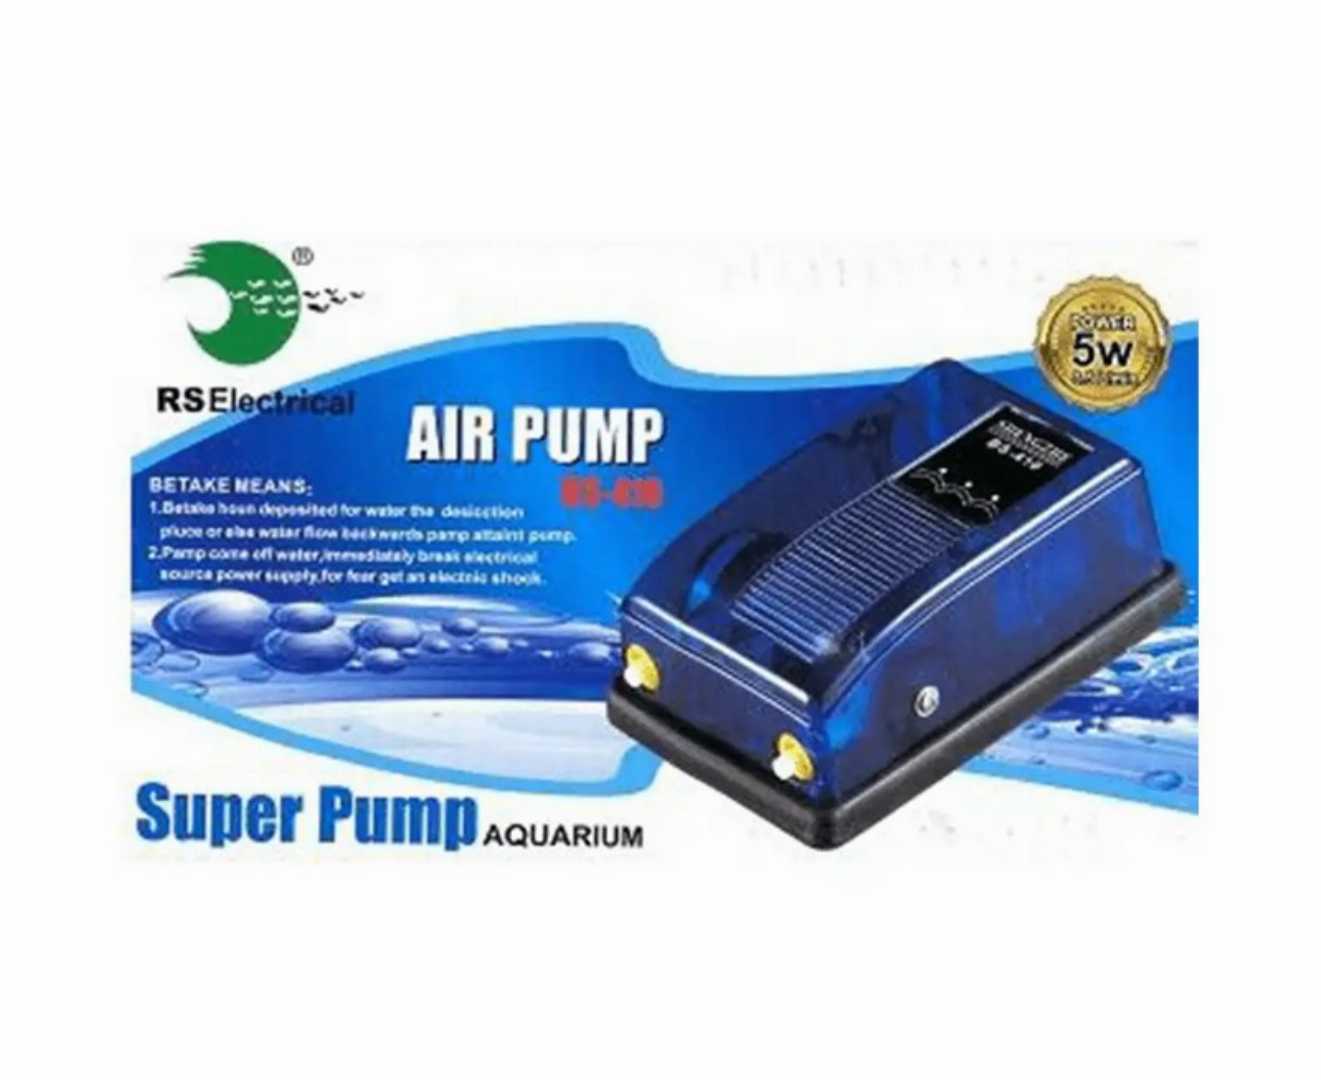 Air,Pump(BS-410)air pump, air pump biofloc, air pump bs-410, air pump price, Biofloc Product